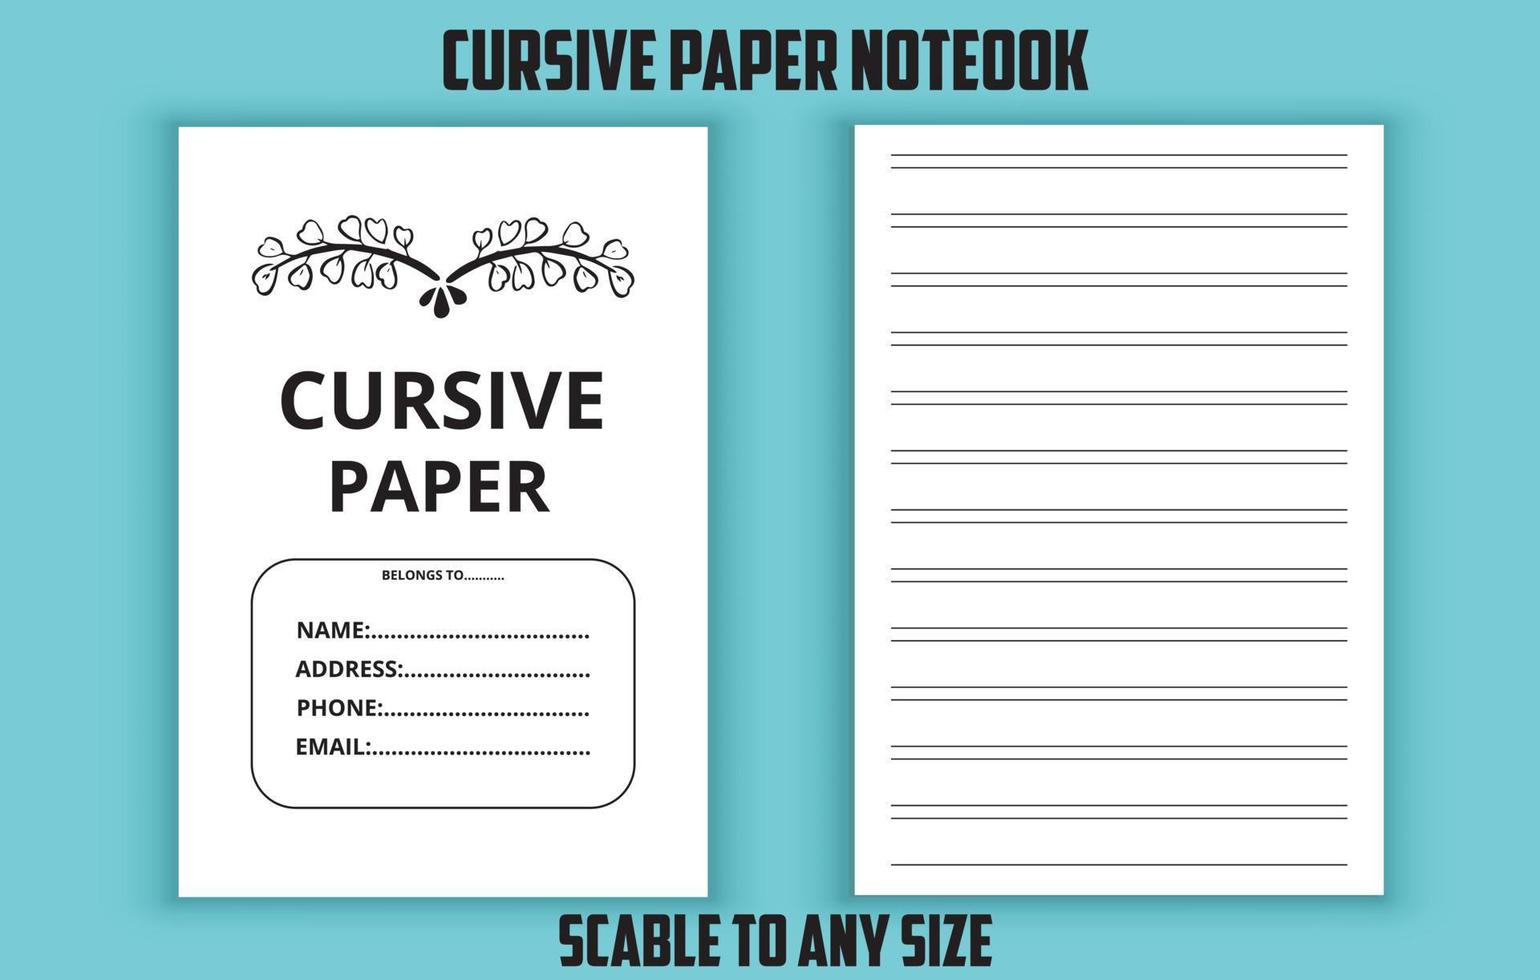 Cursive paper notebook editable template vector